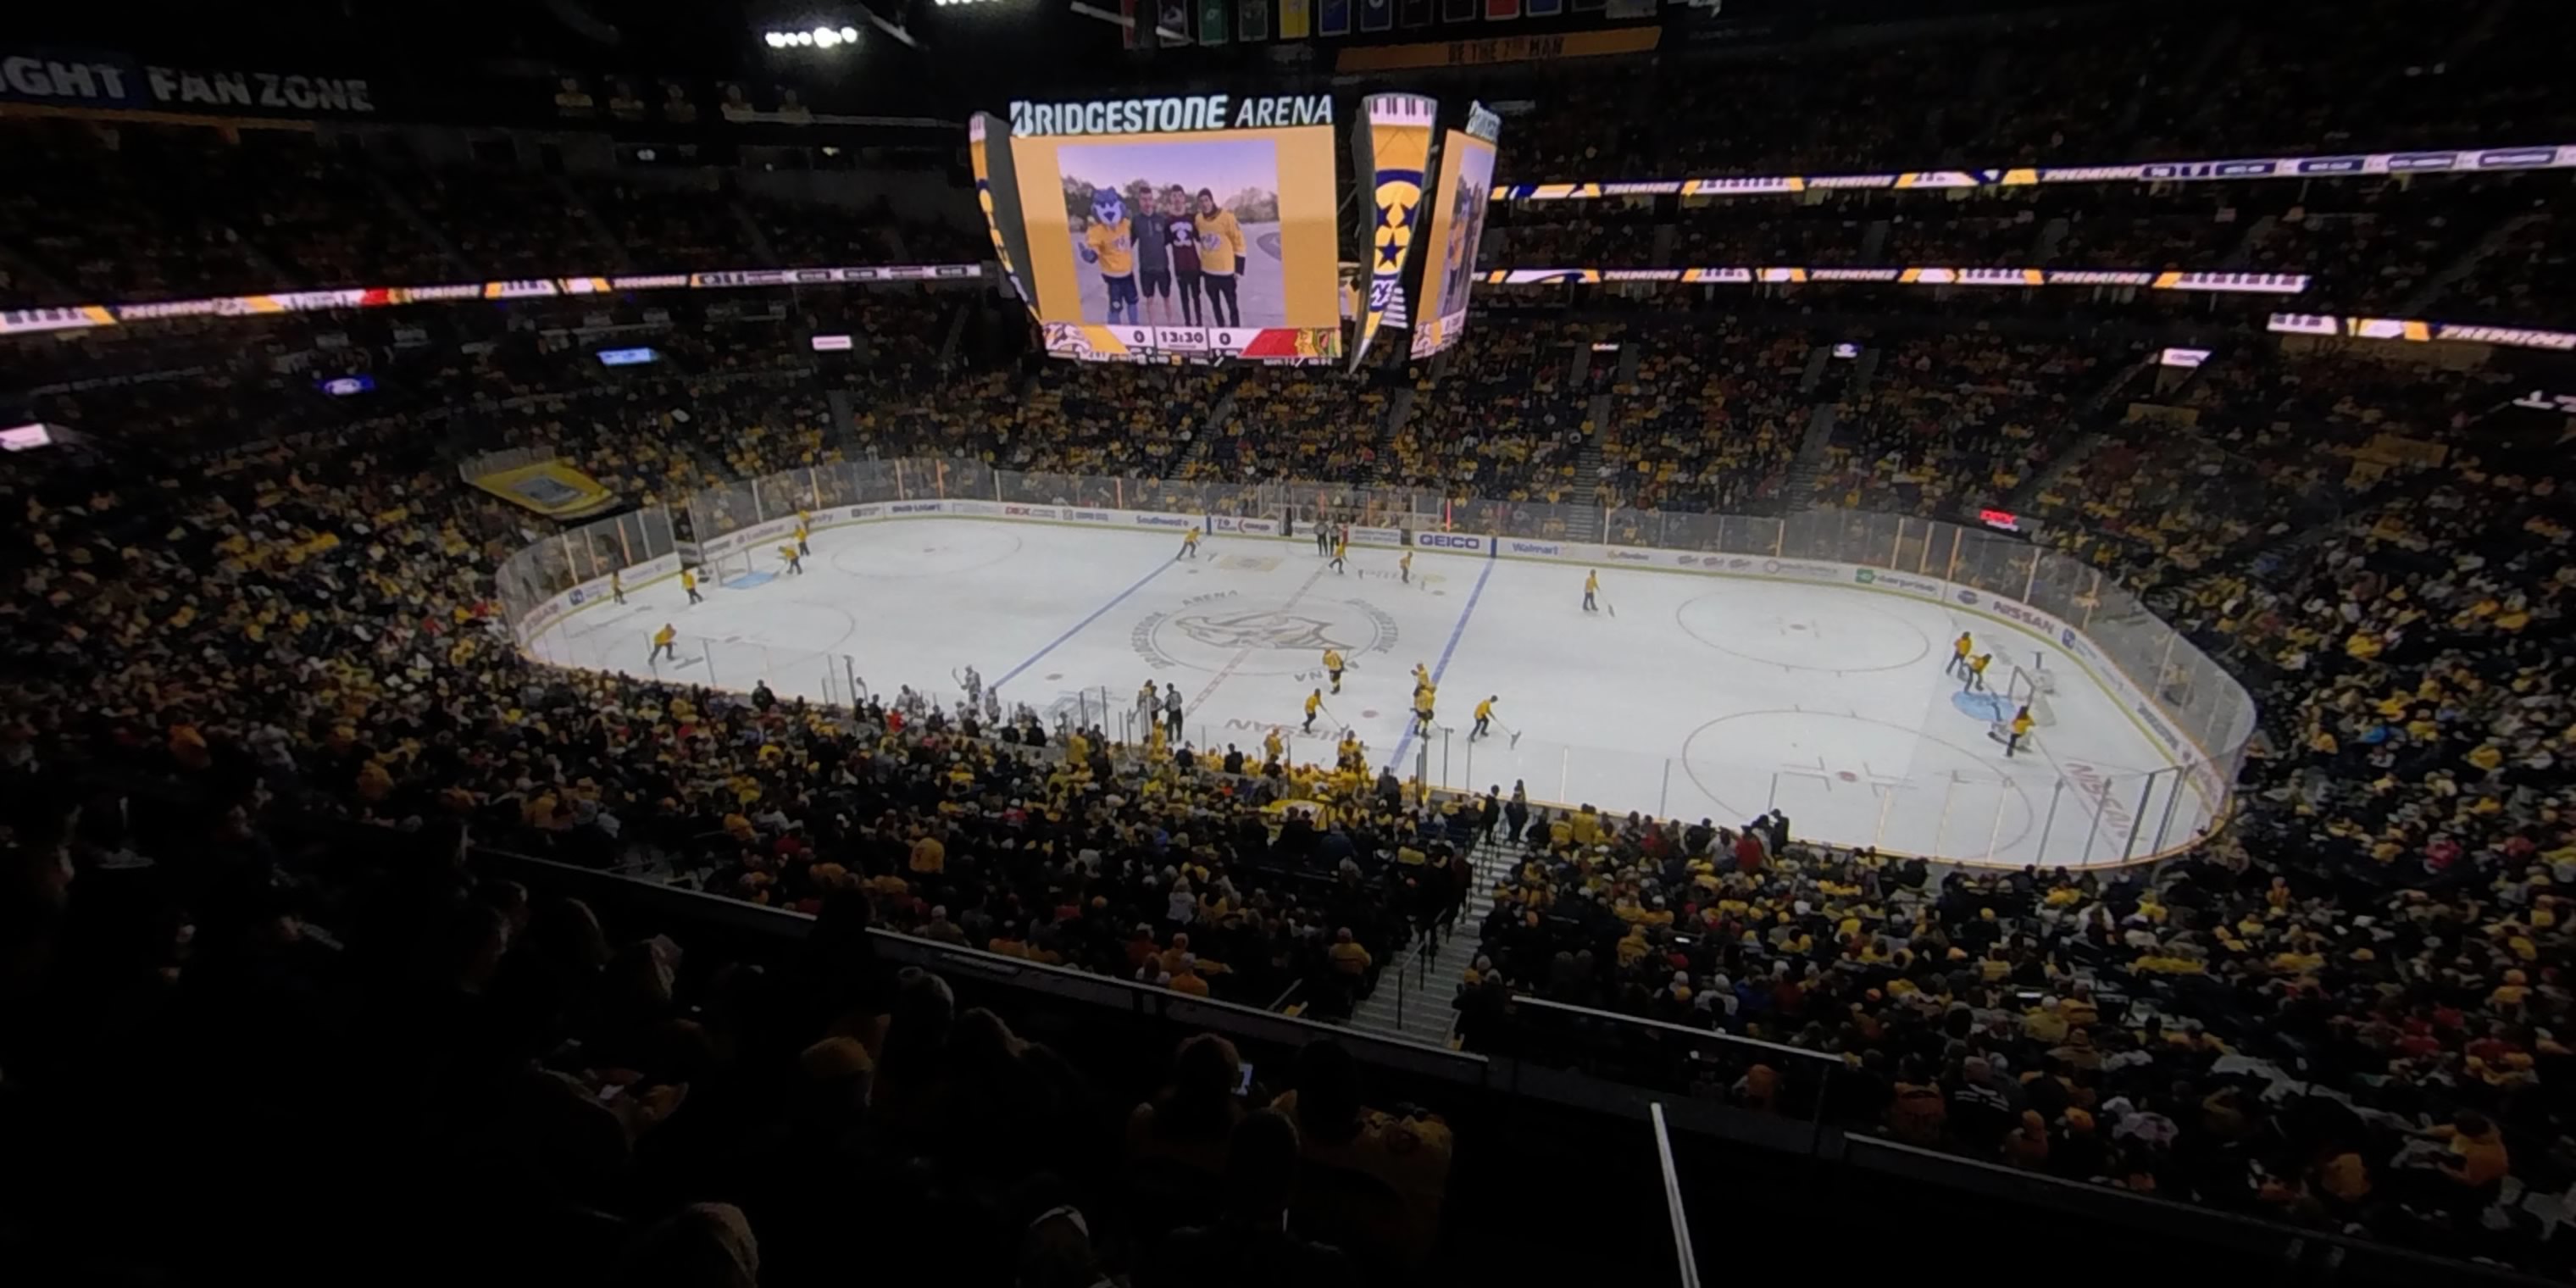 section 217 panoramic seat view  for hockey - bridgestone arena